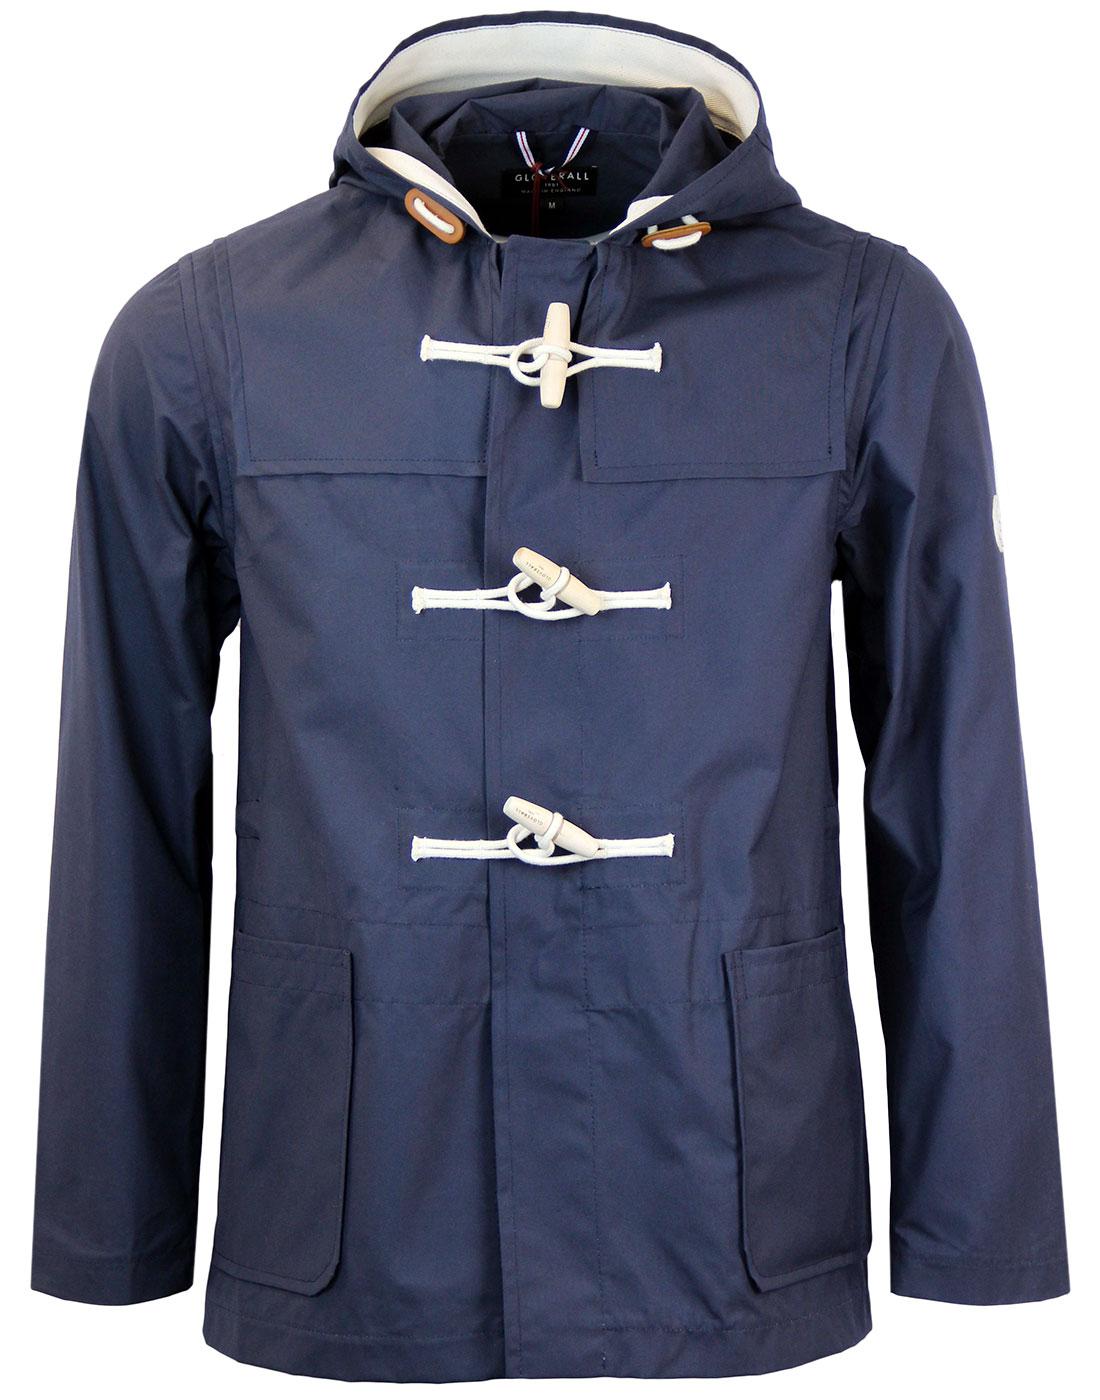 GLOVERALL Retro Mod Lightweight Showerproof Cotton Duffle Coat